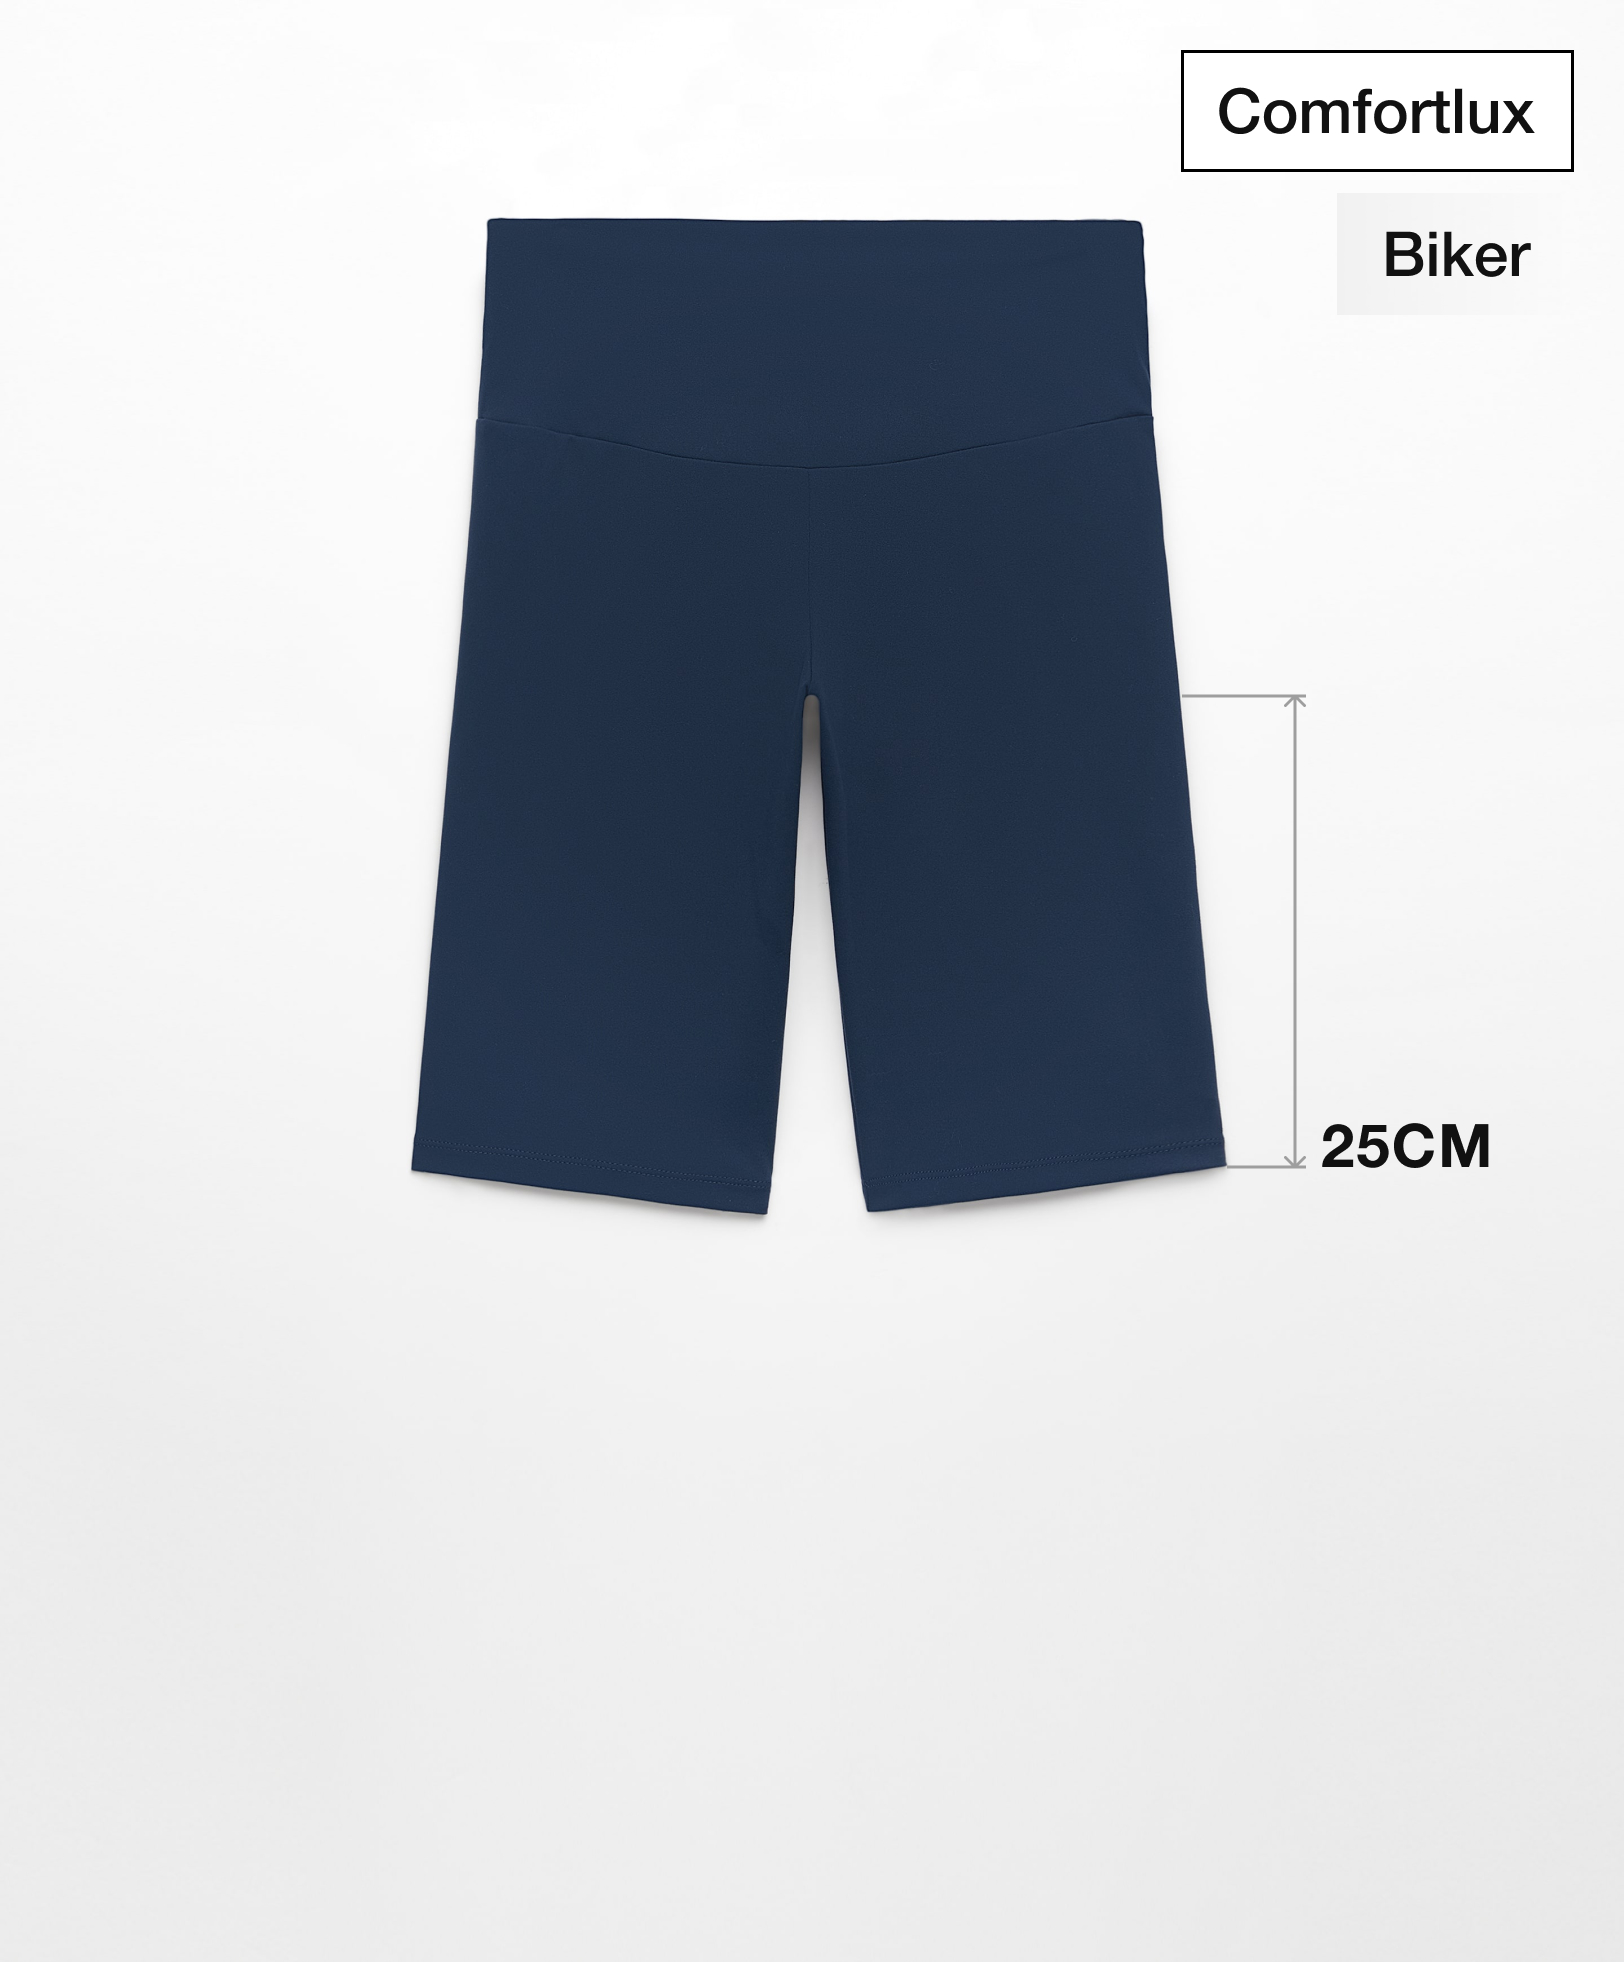 Comfortlux high-rise 25cm cycle leggings